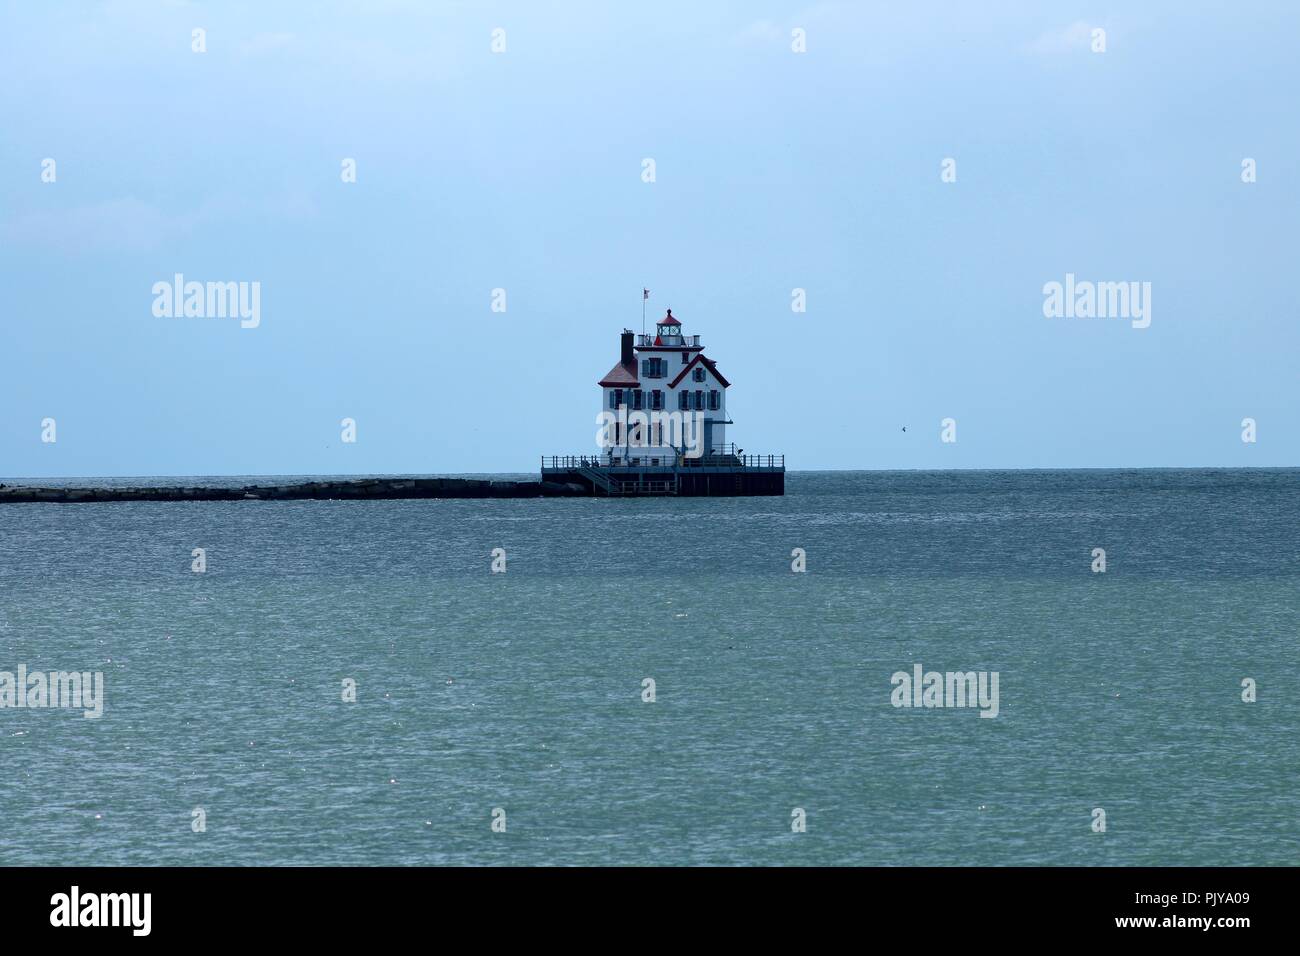 single lighthouse on the lake bright sunny day Stock Photo